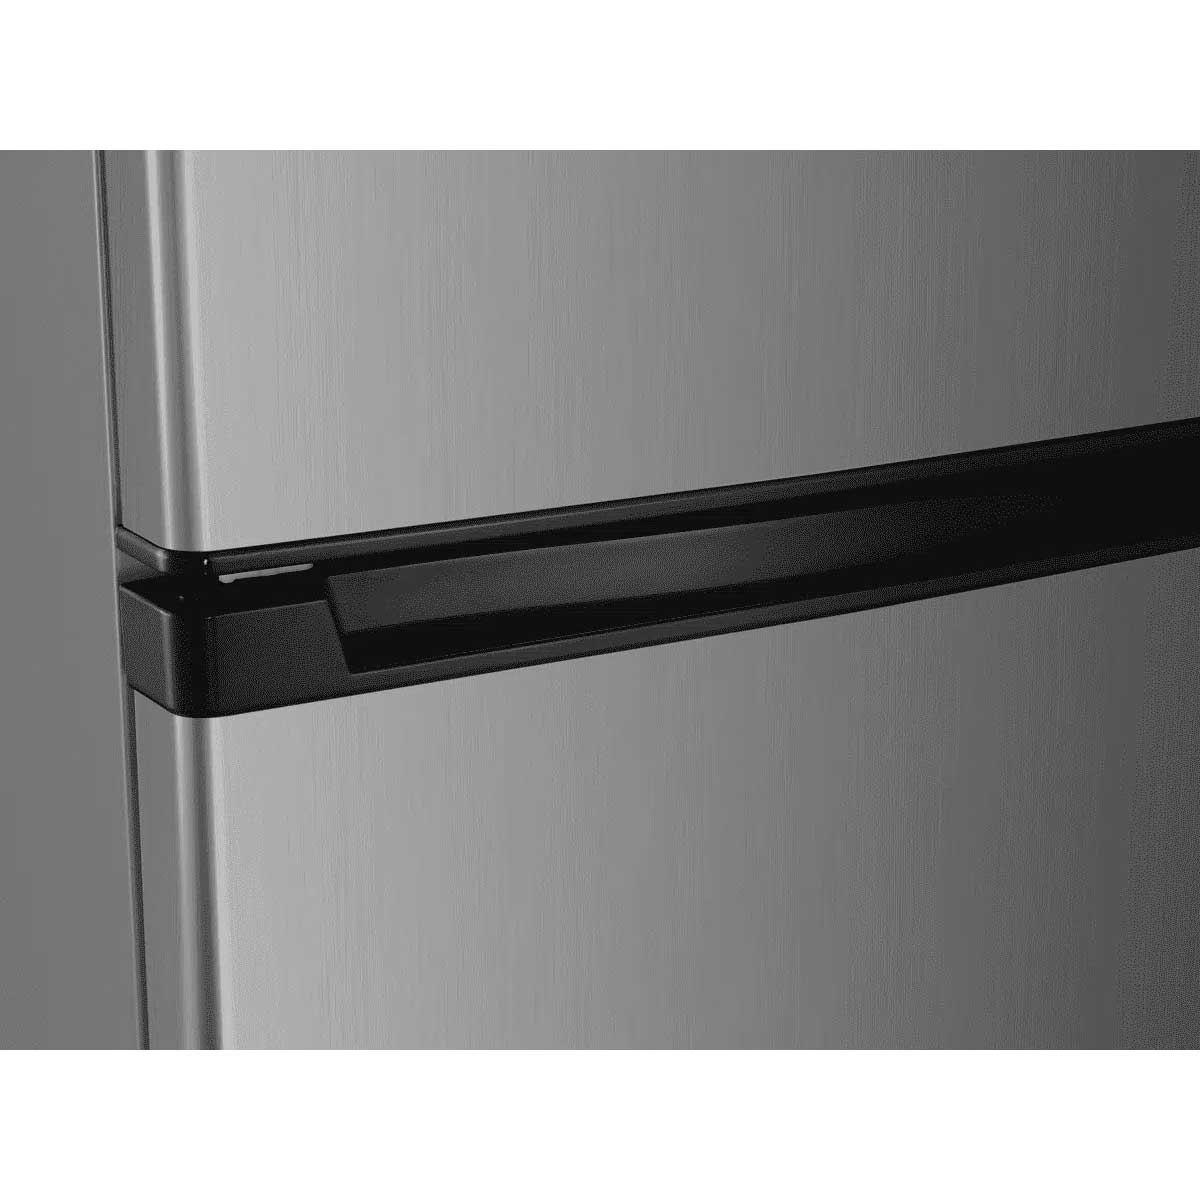 TCL P293BF 286升 下置冷凍室雙門雪櫃 - ShineCreation 創暉百貨